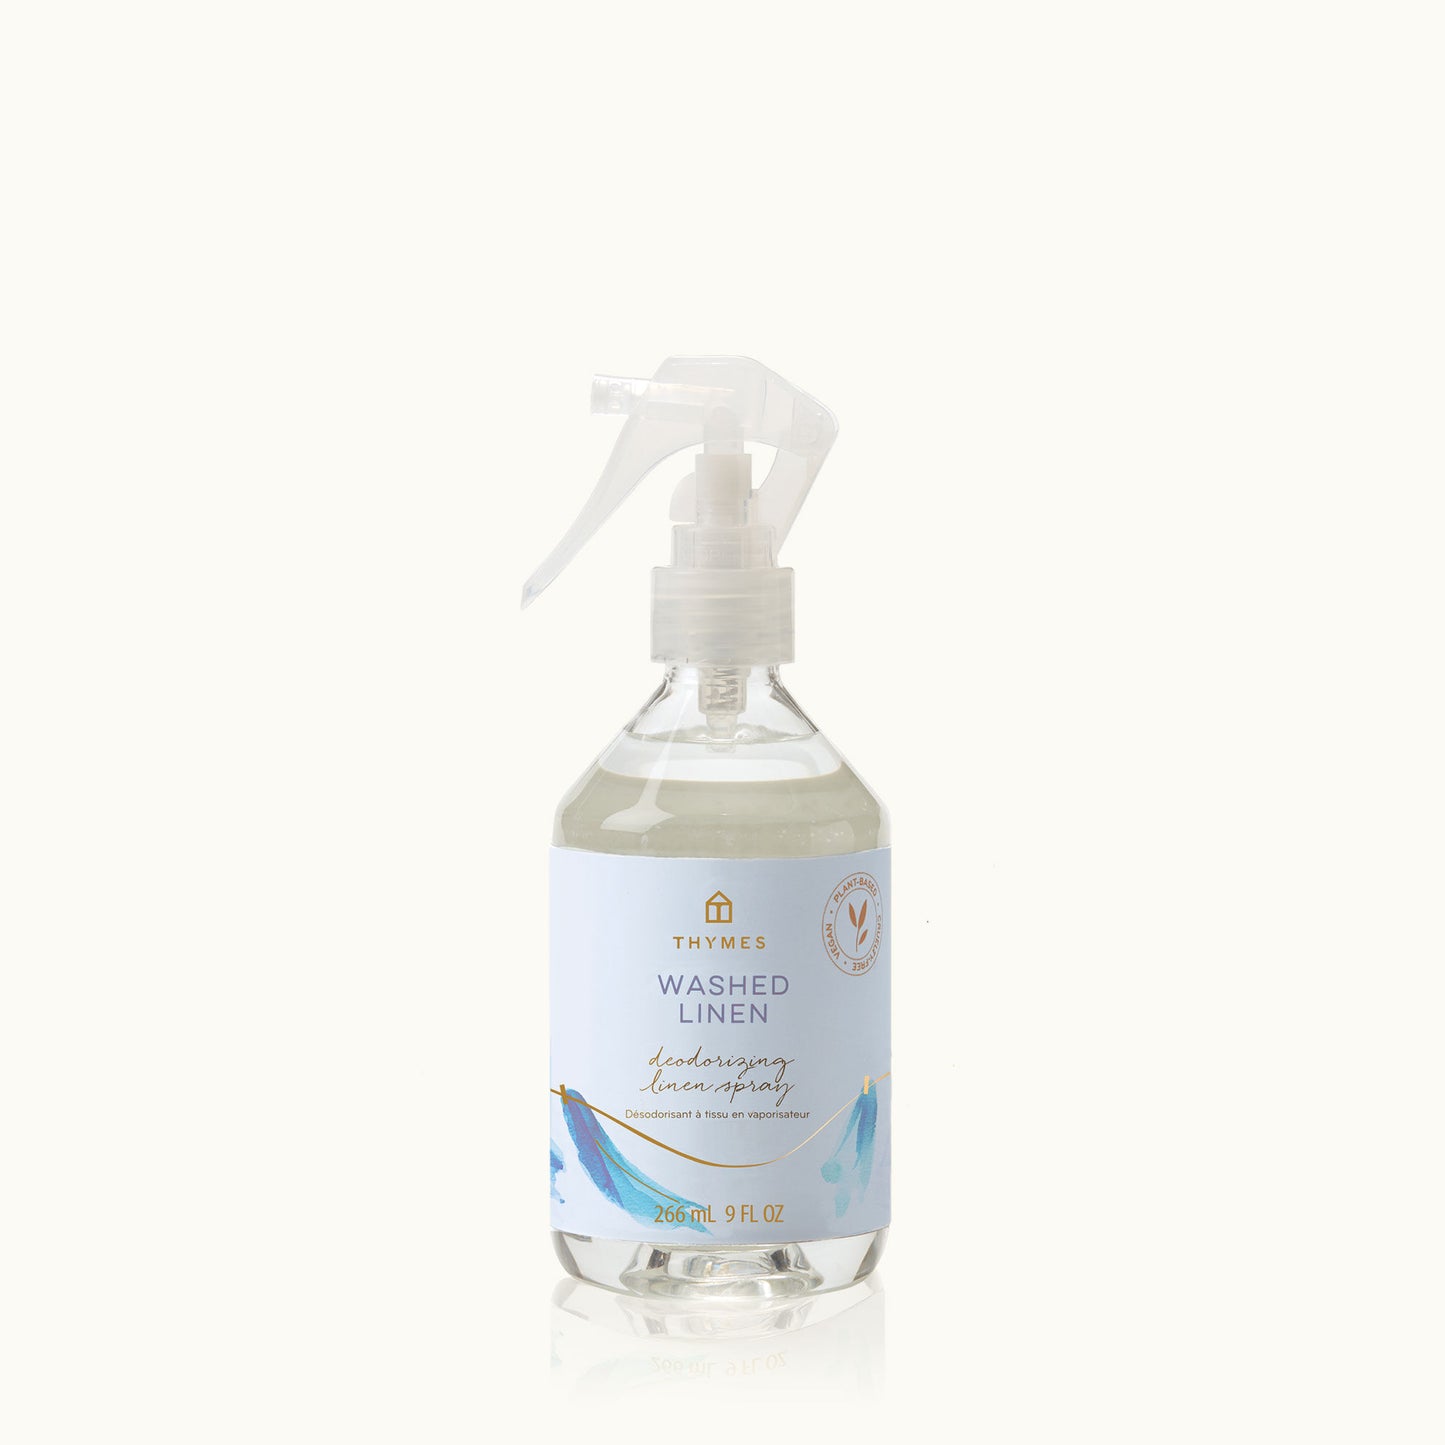 Washed Linen Deodorizing Linen Spray, 9 fl oz